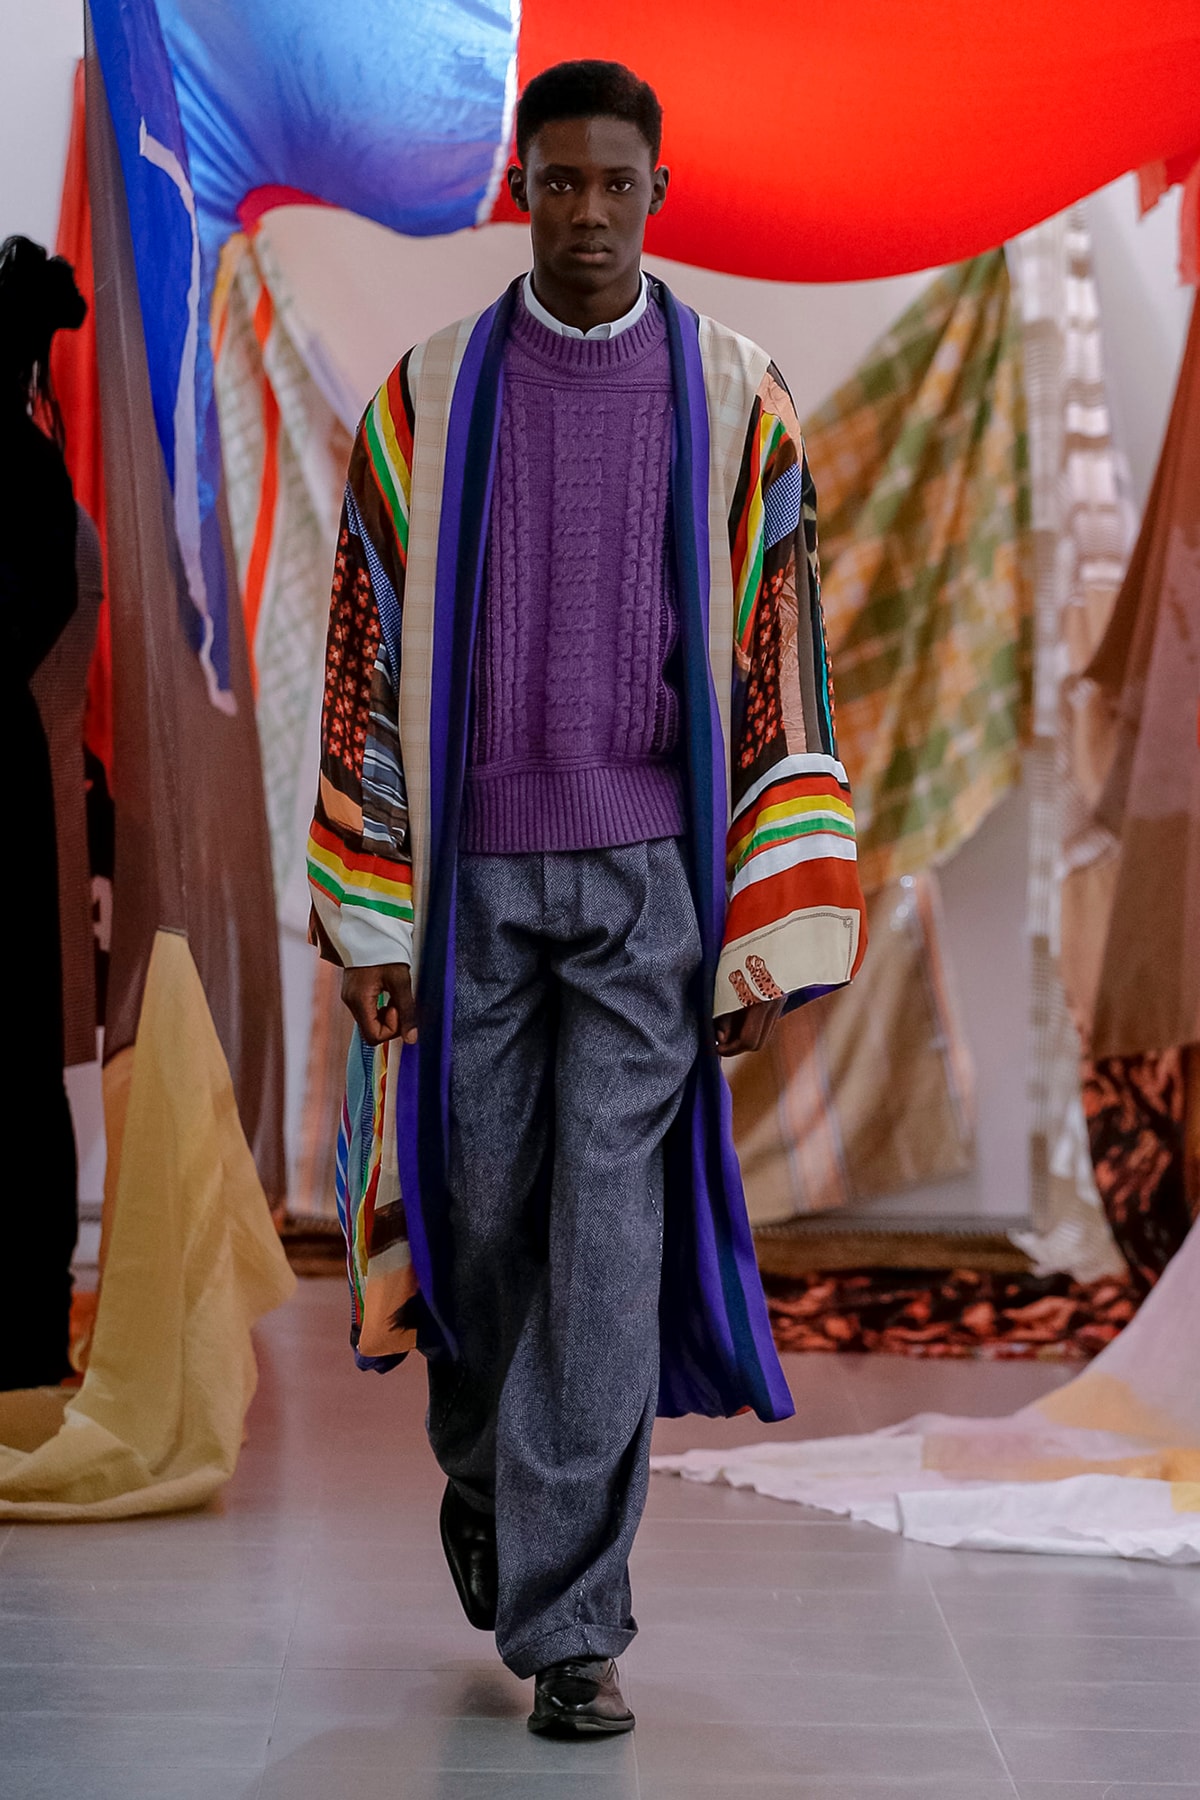 Wales Bonner Fall/Winter 2019 London Fashion Week College Collegiate African Heritage Ishmael Reed Ben Okri